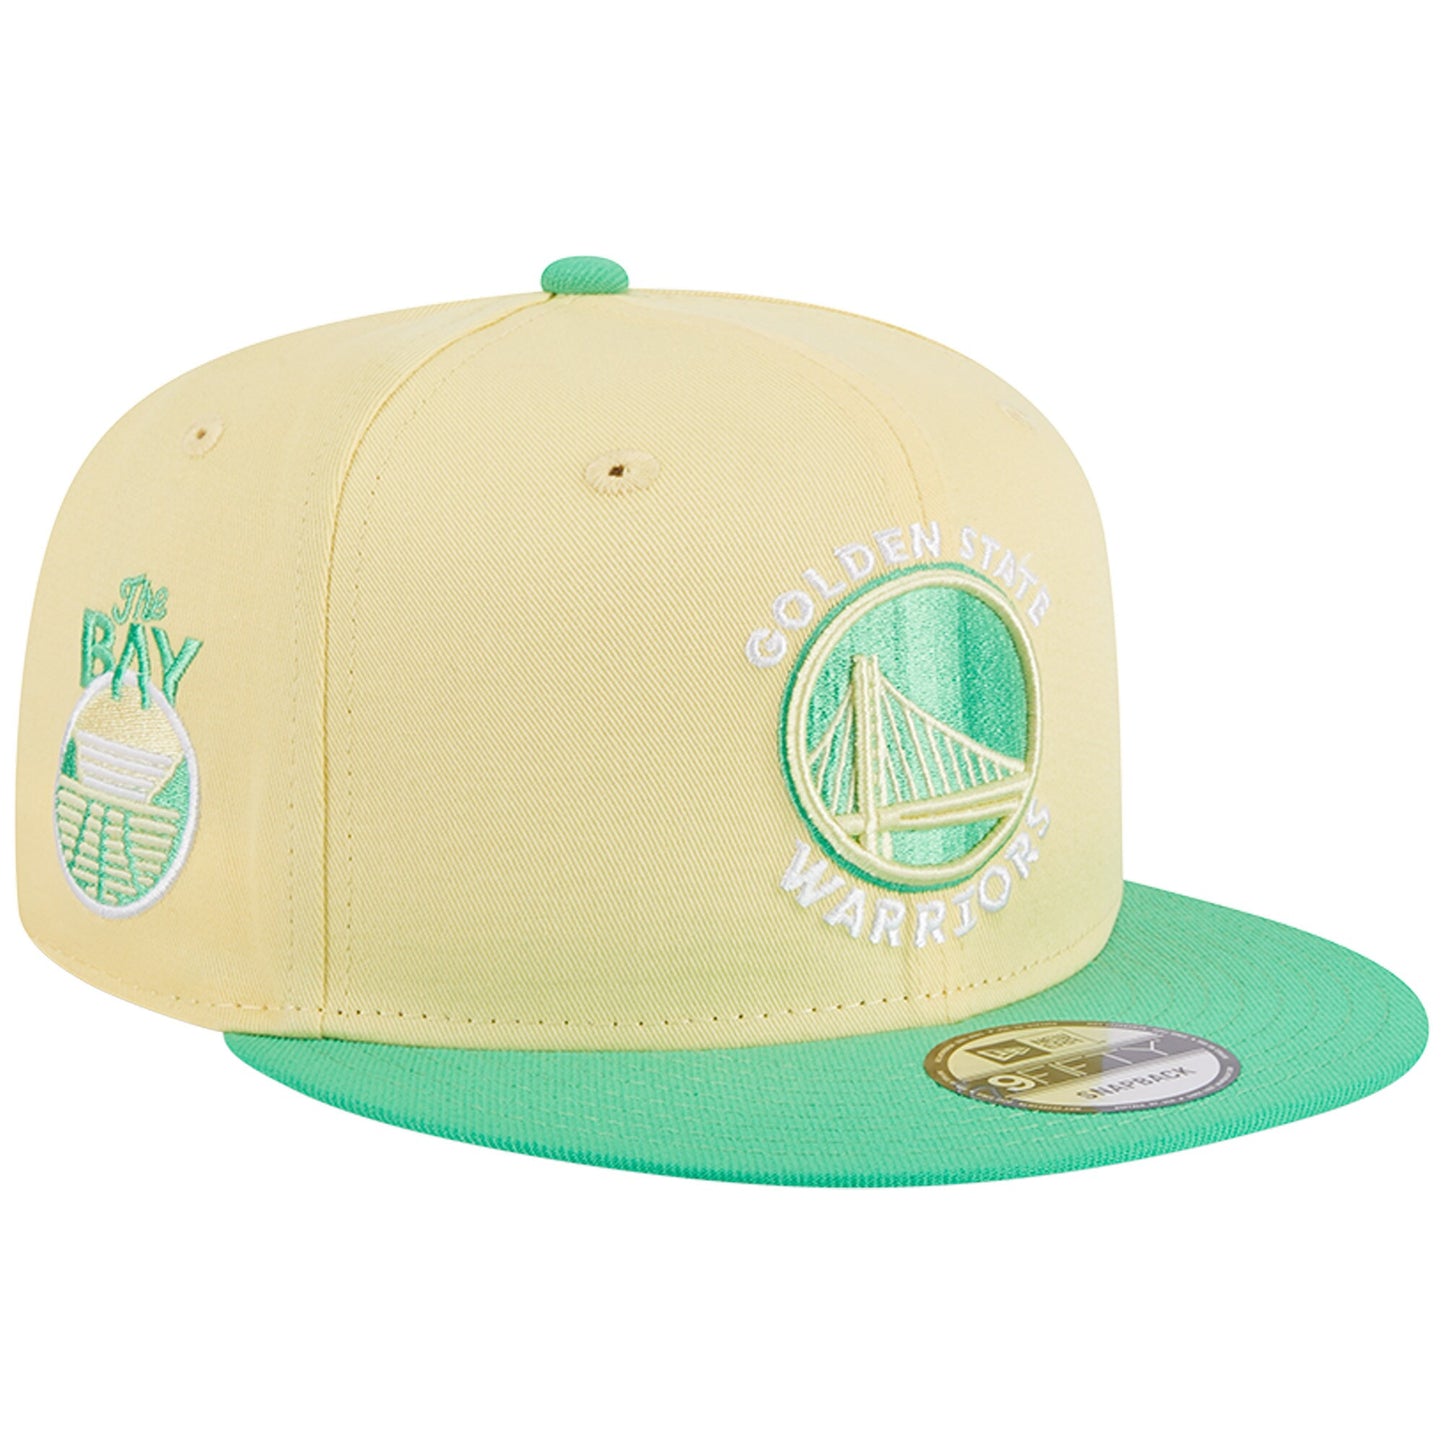 Golden State Warriors New Era 9FIFTY Hat - Yellow/Green